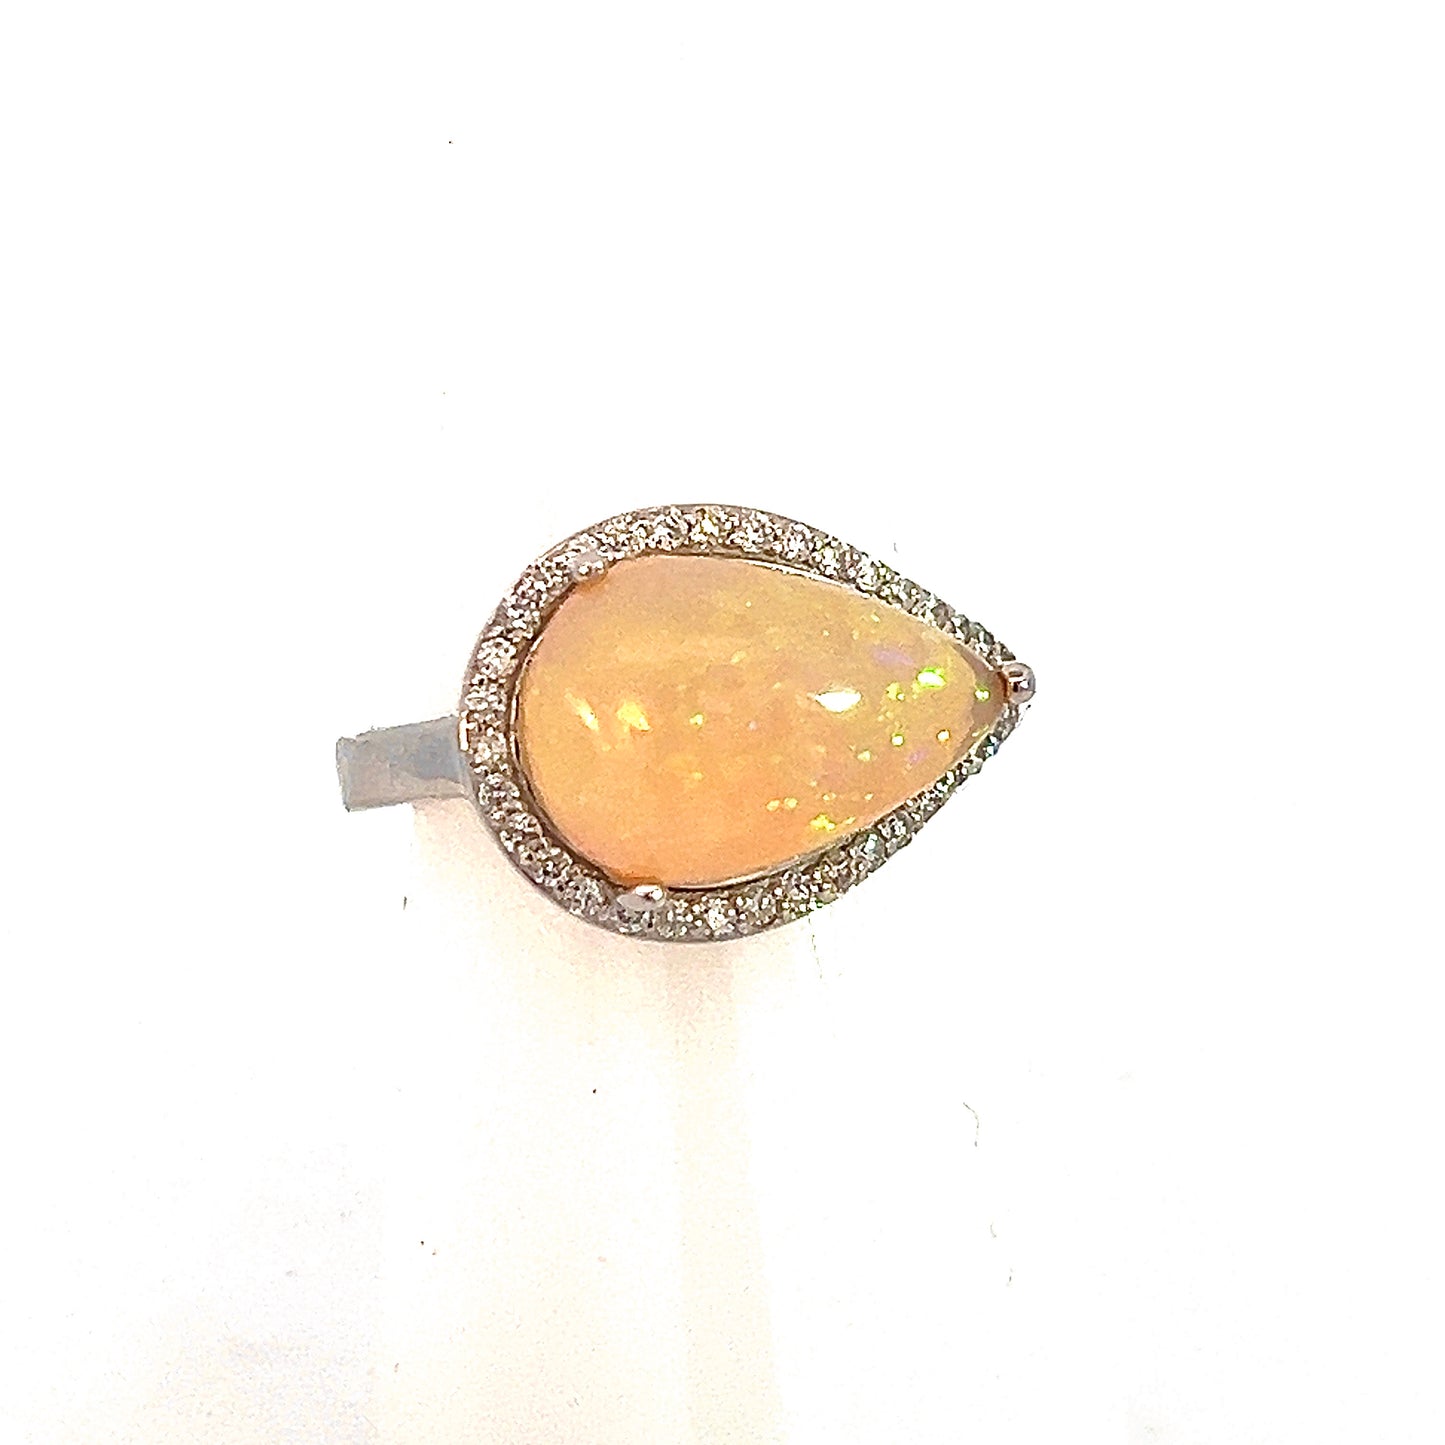 Natural Opal Diamond Ring 6.75 14k W Gold 4 TCW Certified $4,950 310548